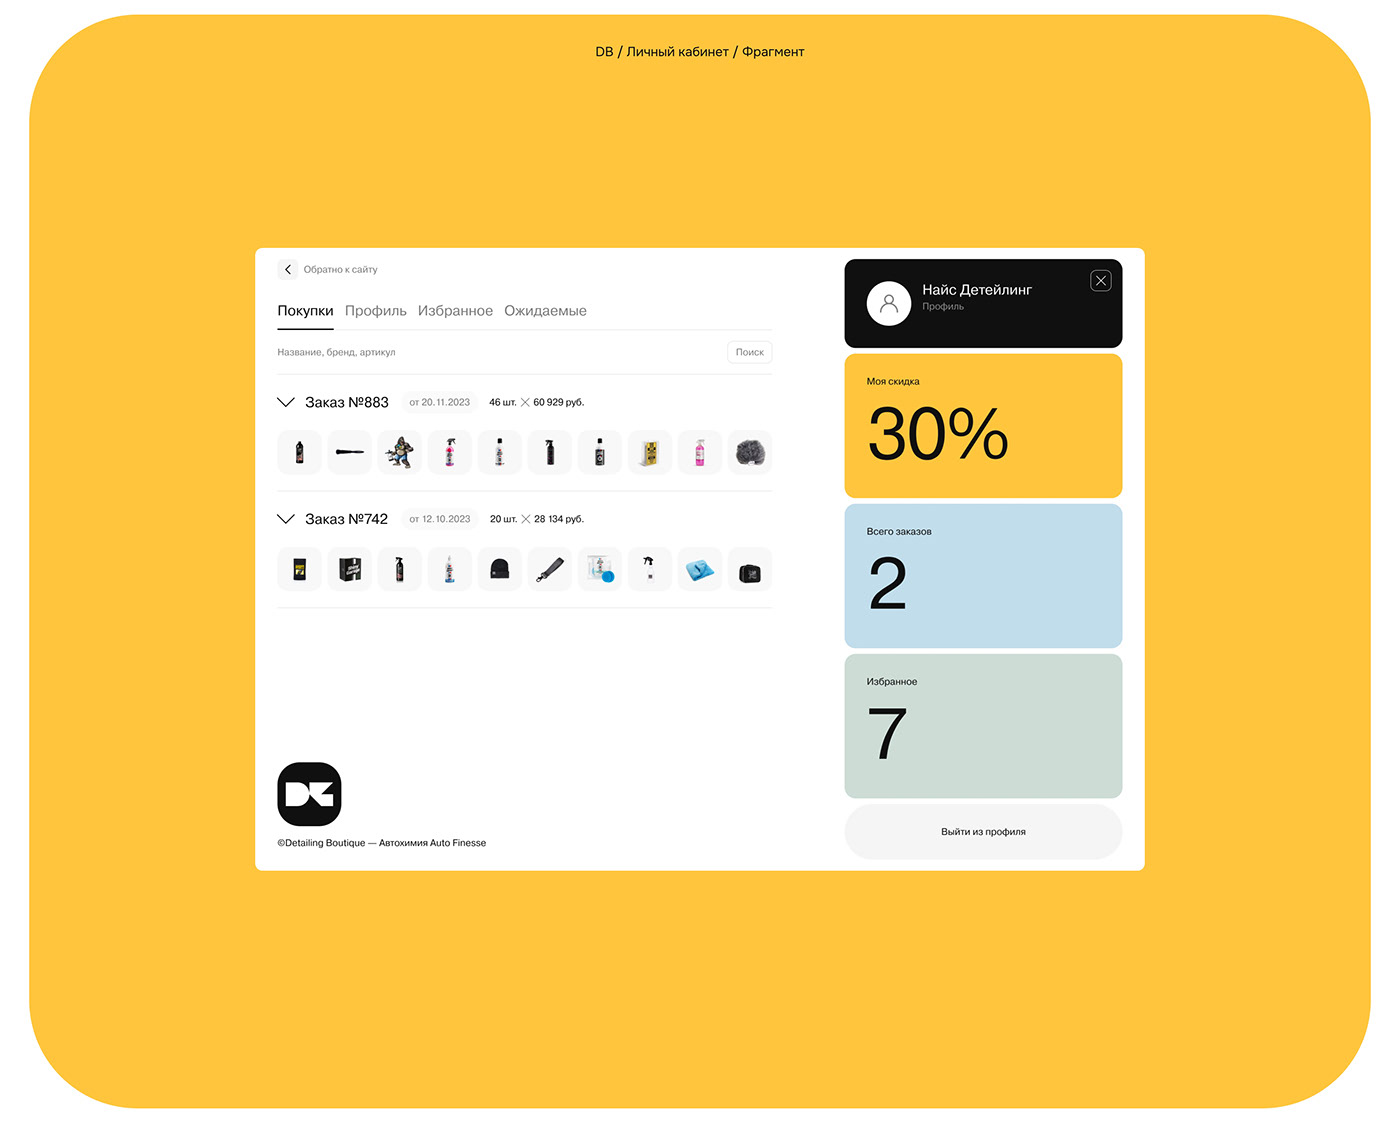 Cases portfolio Web mobile minimal modern works new Portfolio Design designer